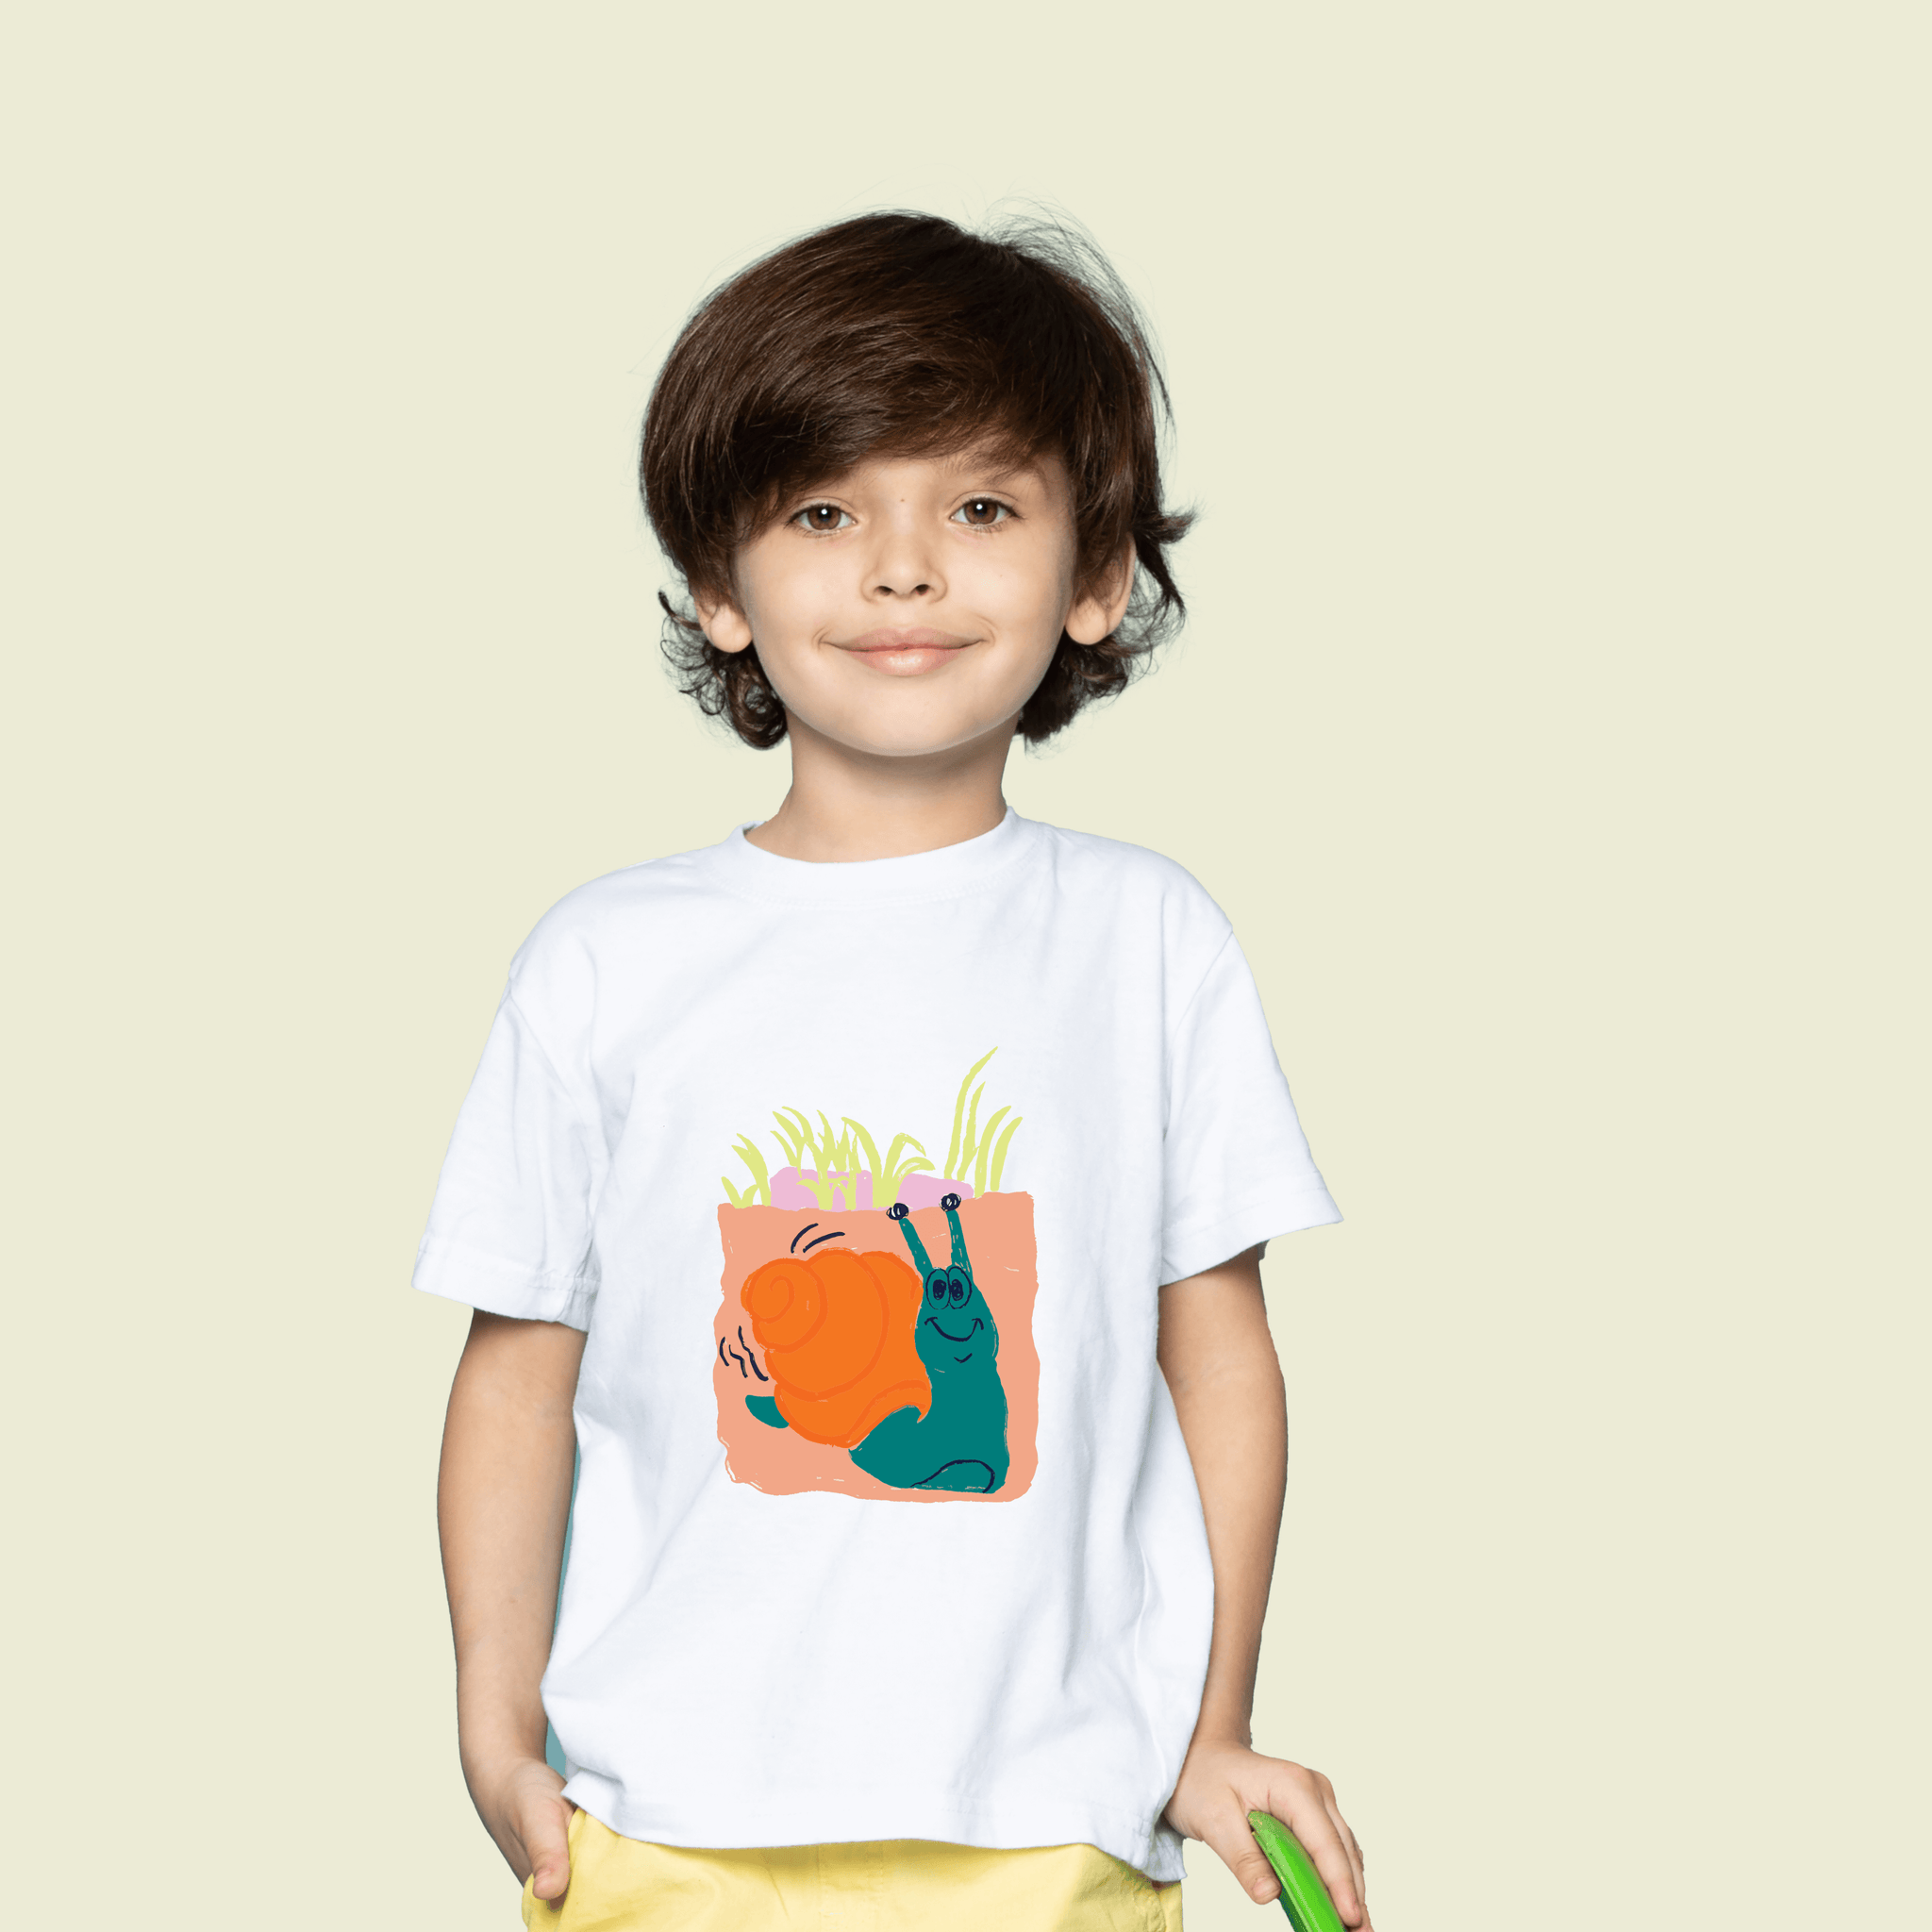 Snail T-shirt For Boys